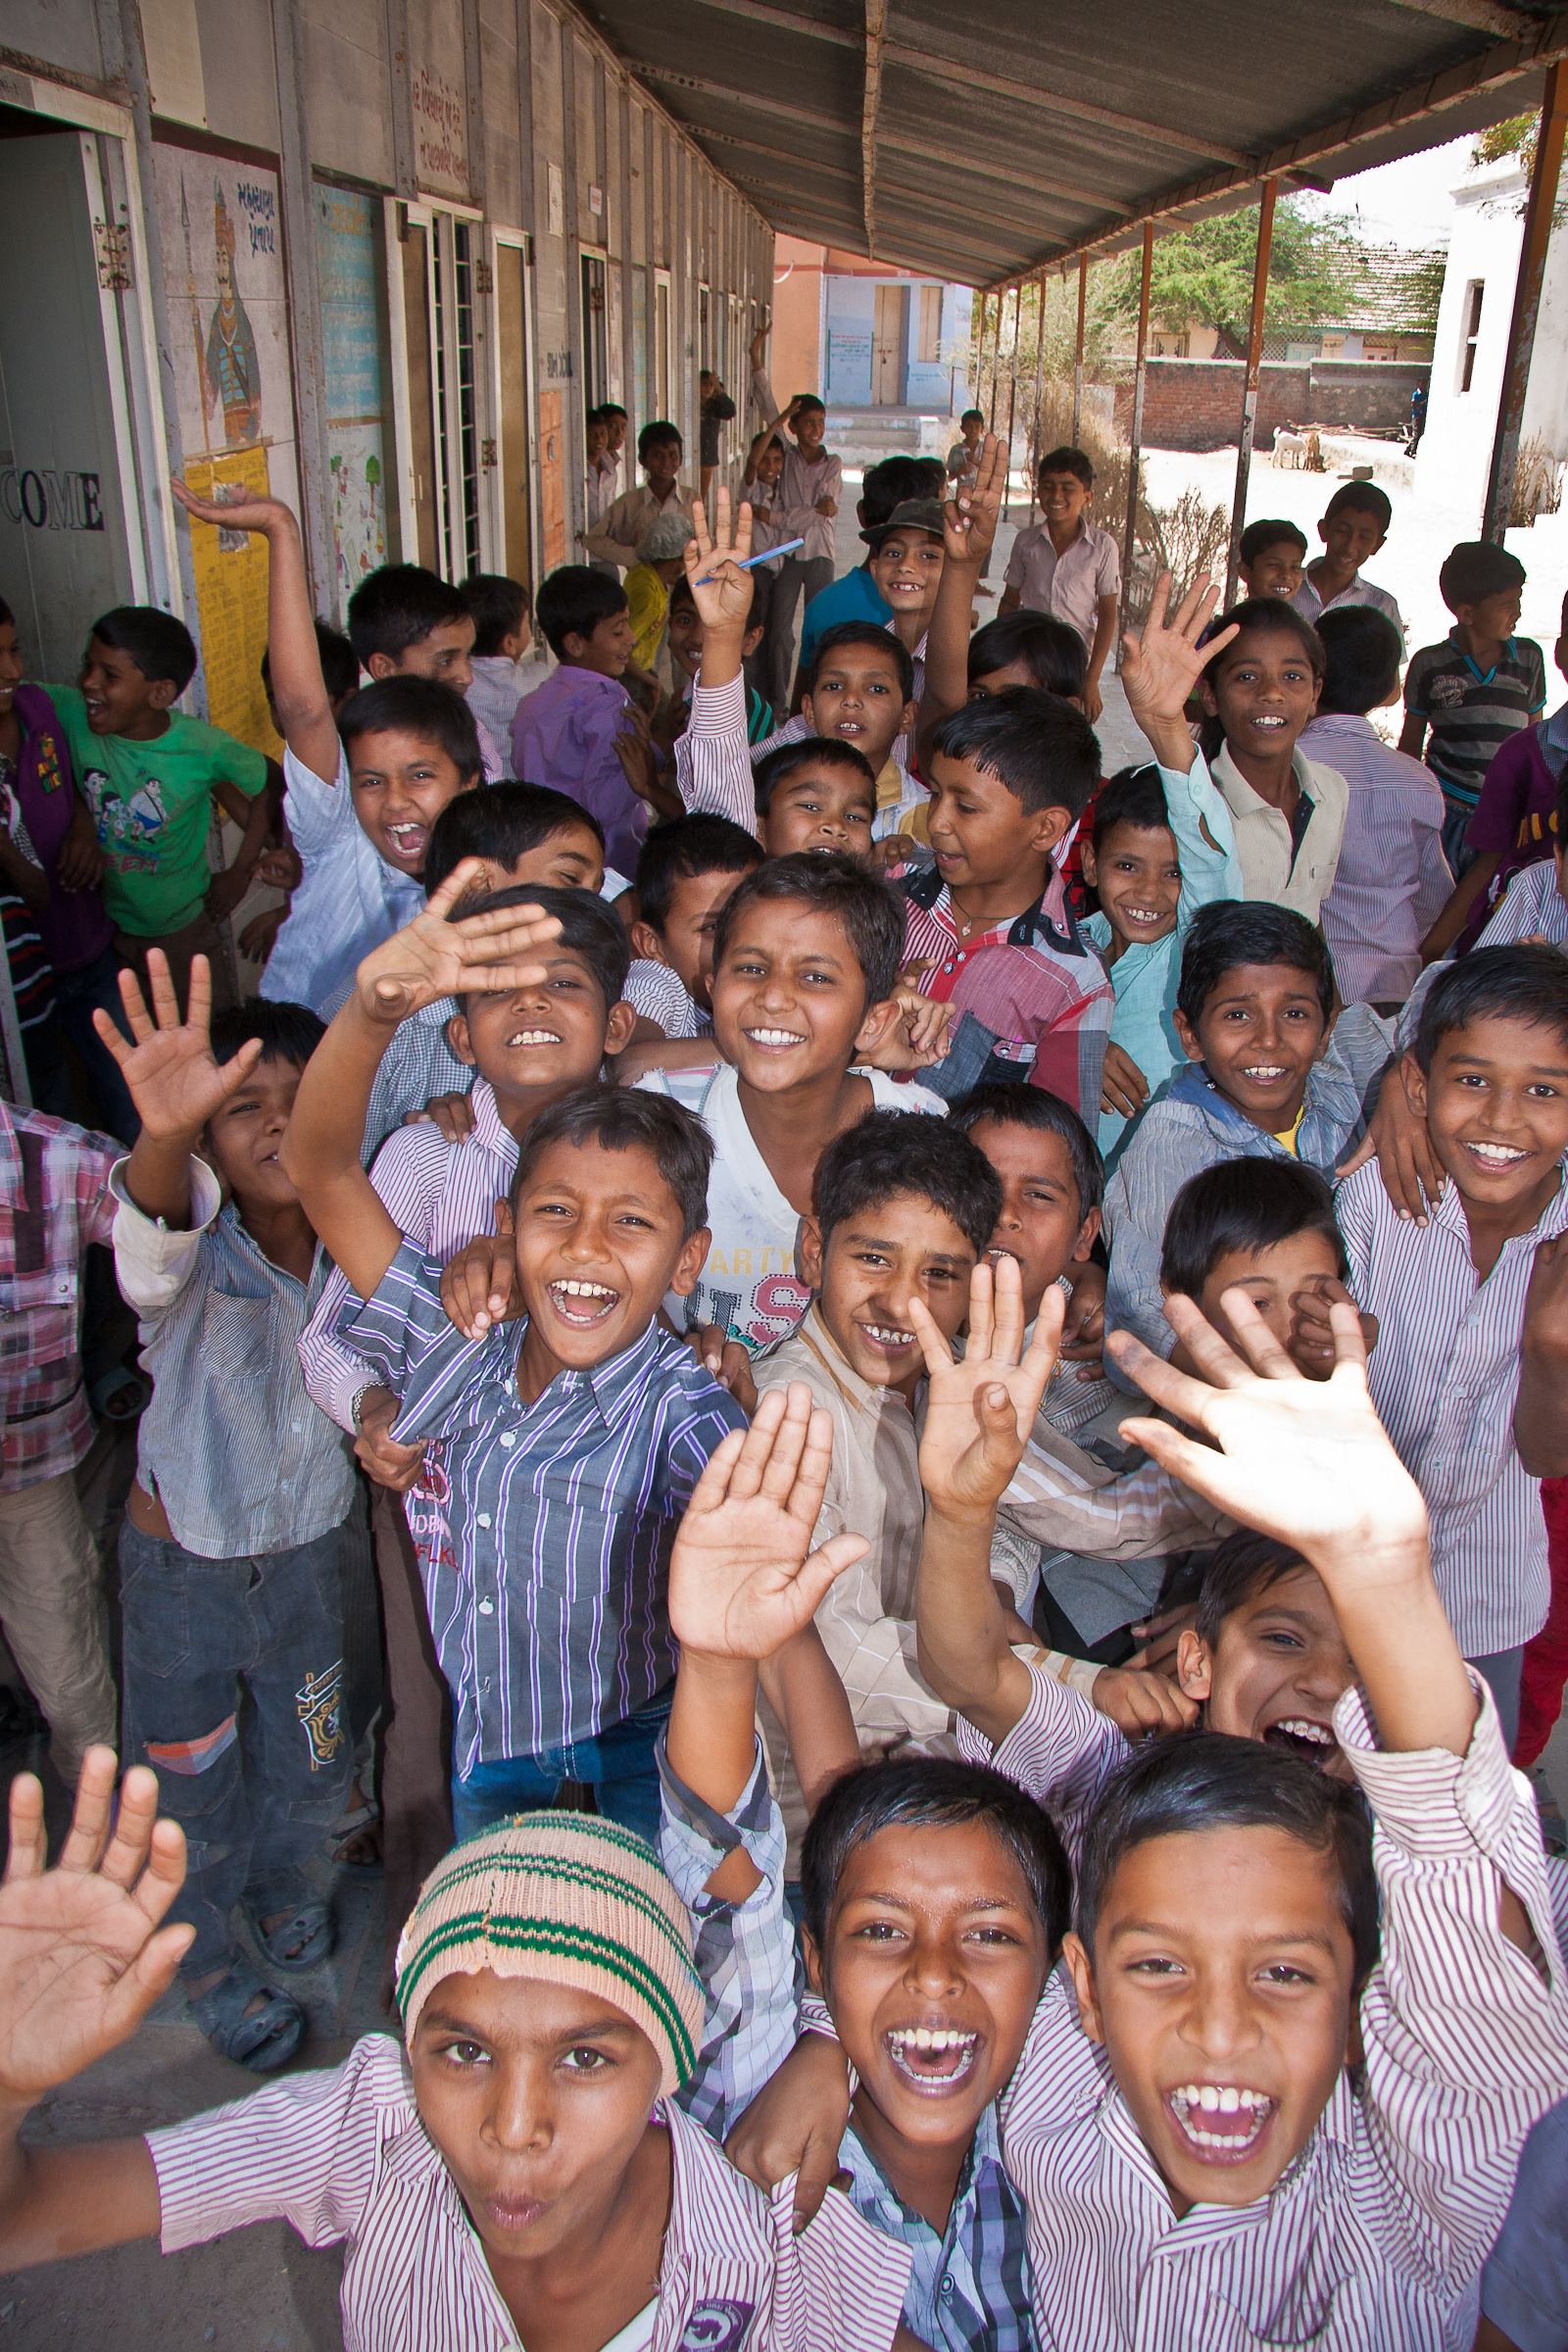 Children welcoming seldom seen travellers in their little school